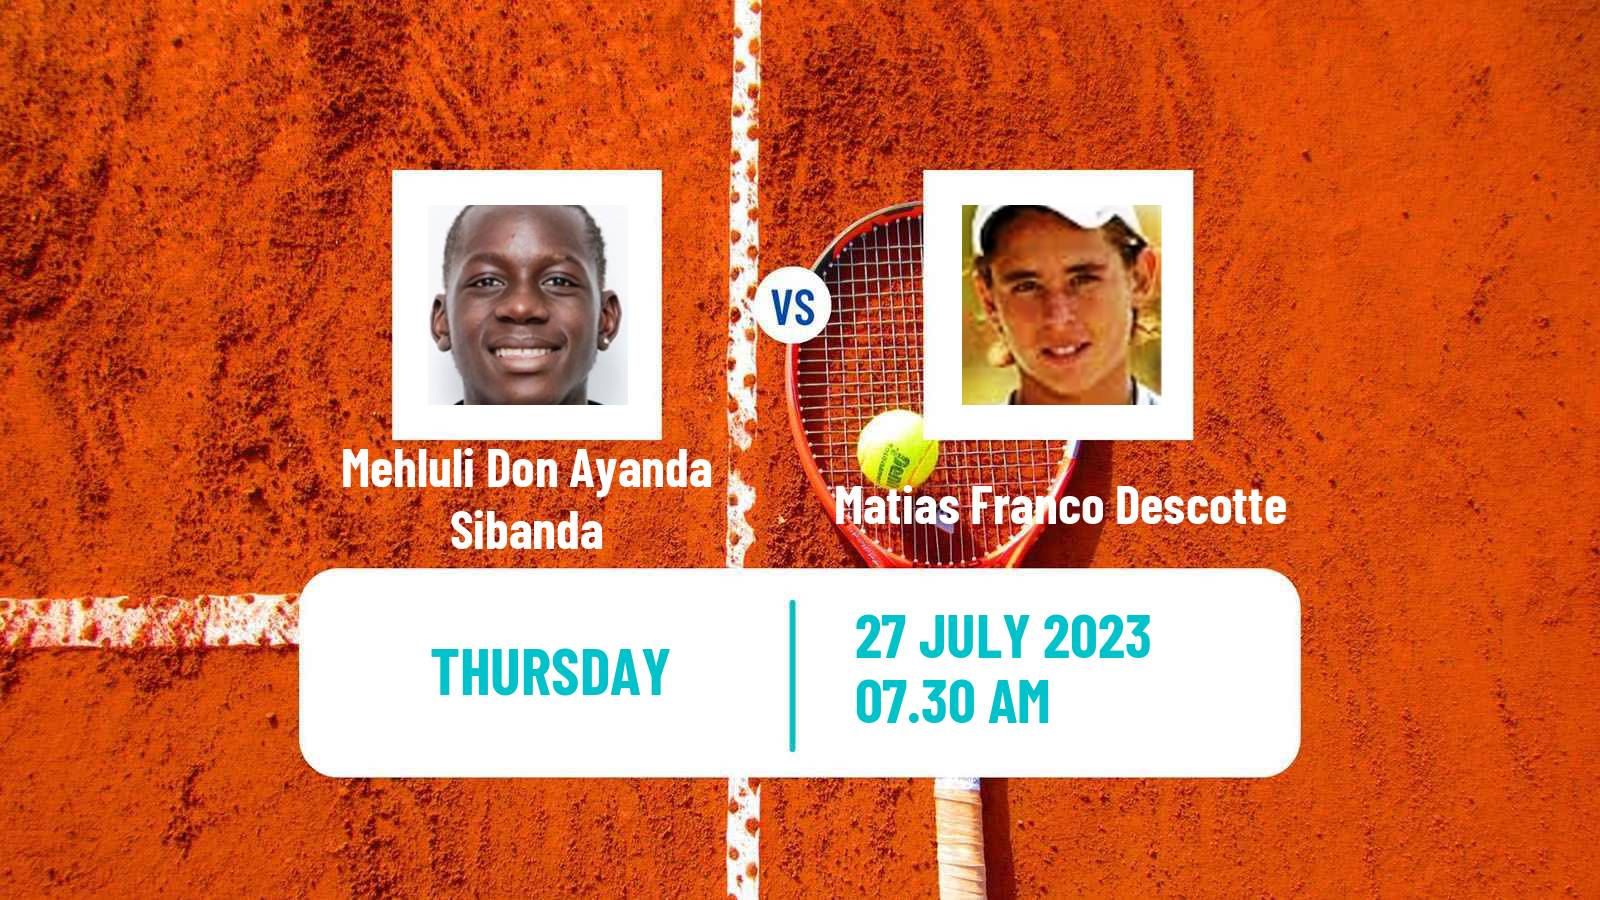 Tennis ITF M25 Brazzaville 2 Men Mehluli Don Ayanda Sibanda - Matias Franco Descotte